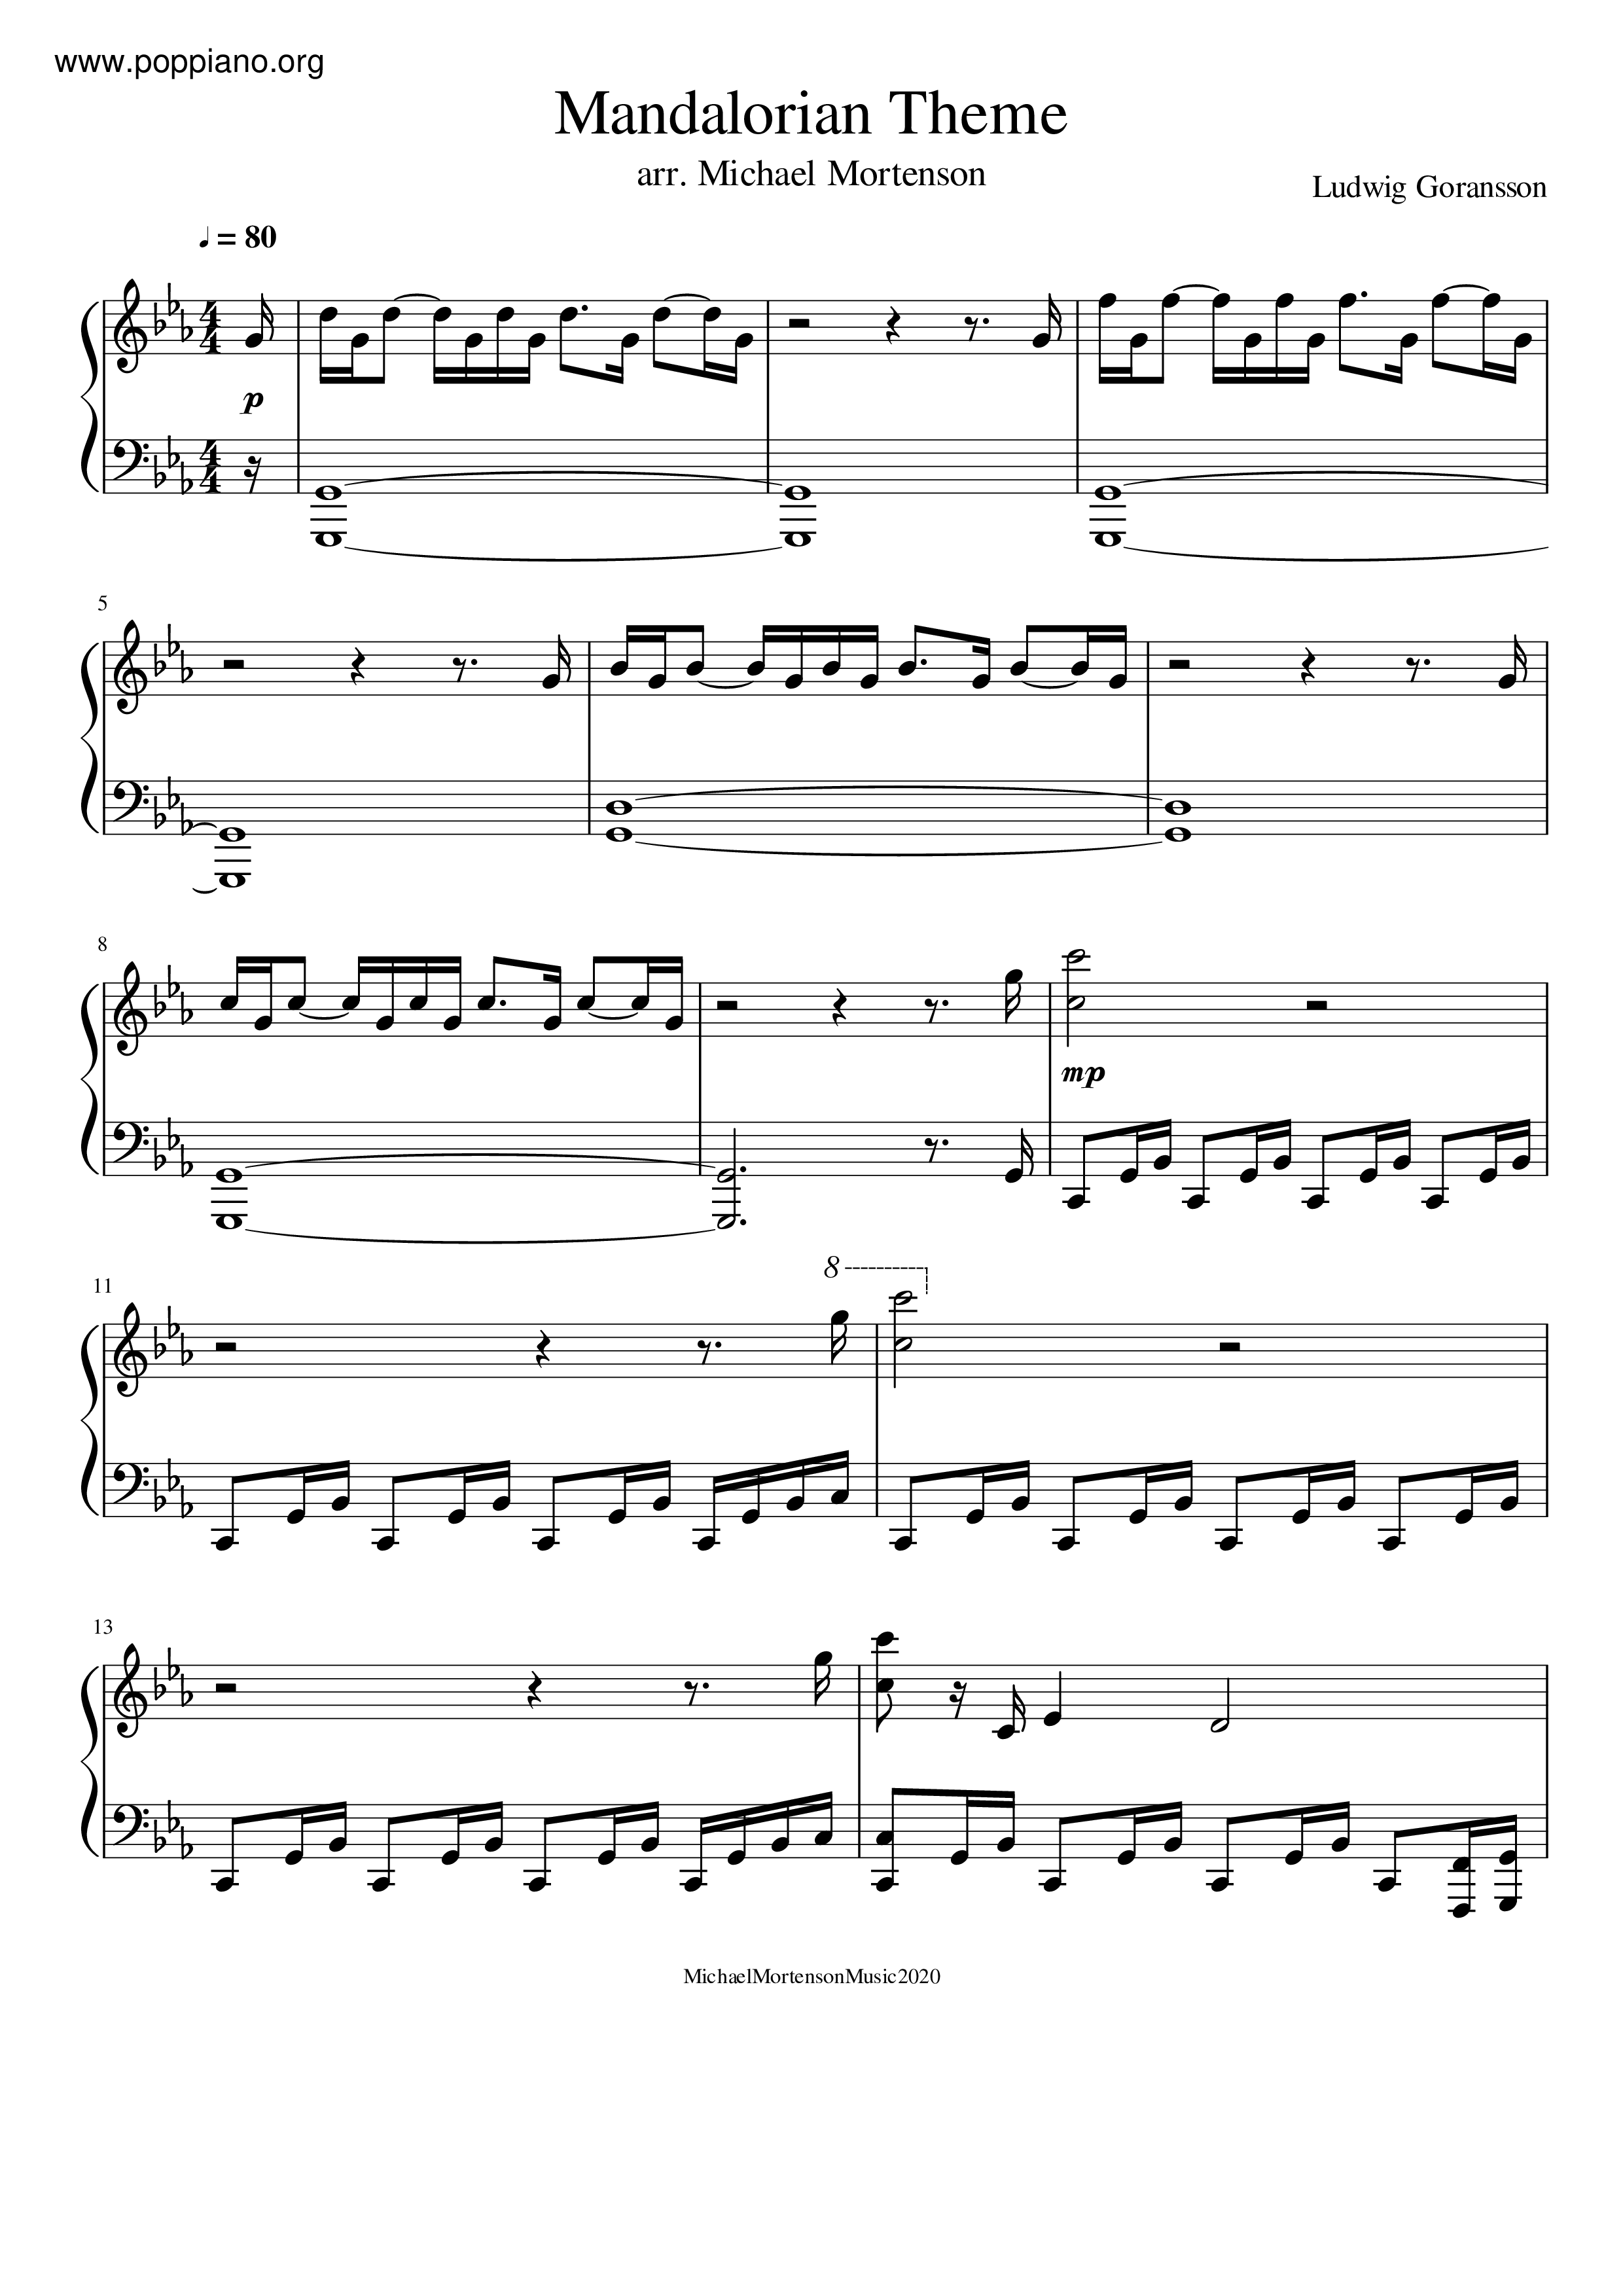 The Mandalorian Theme琴譜